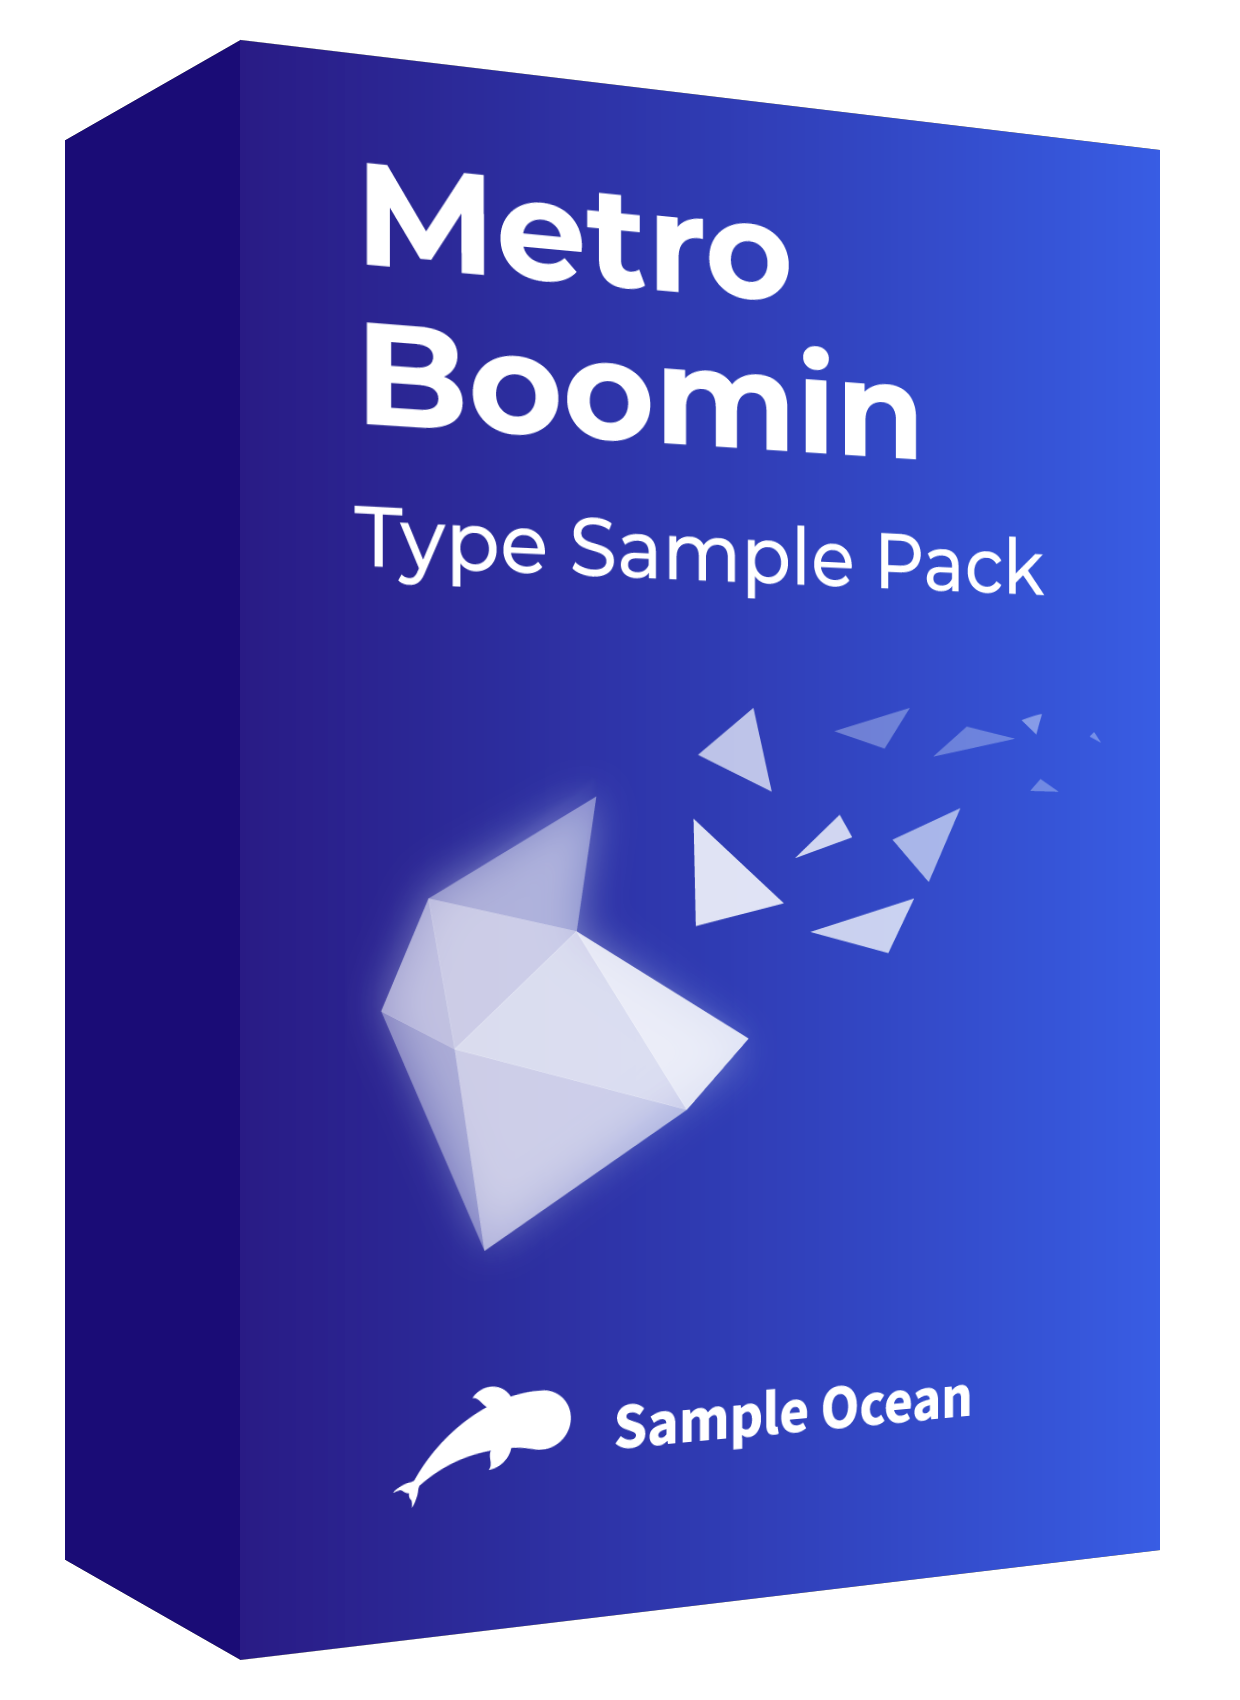 free sample pack